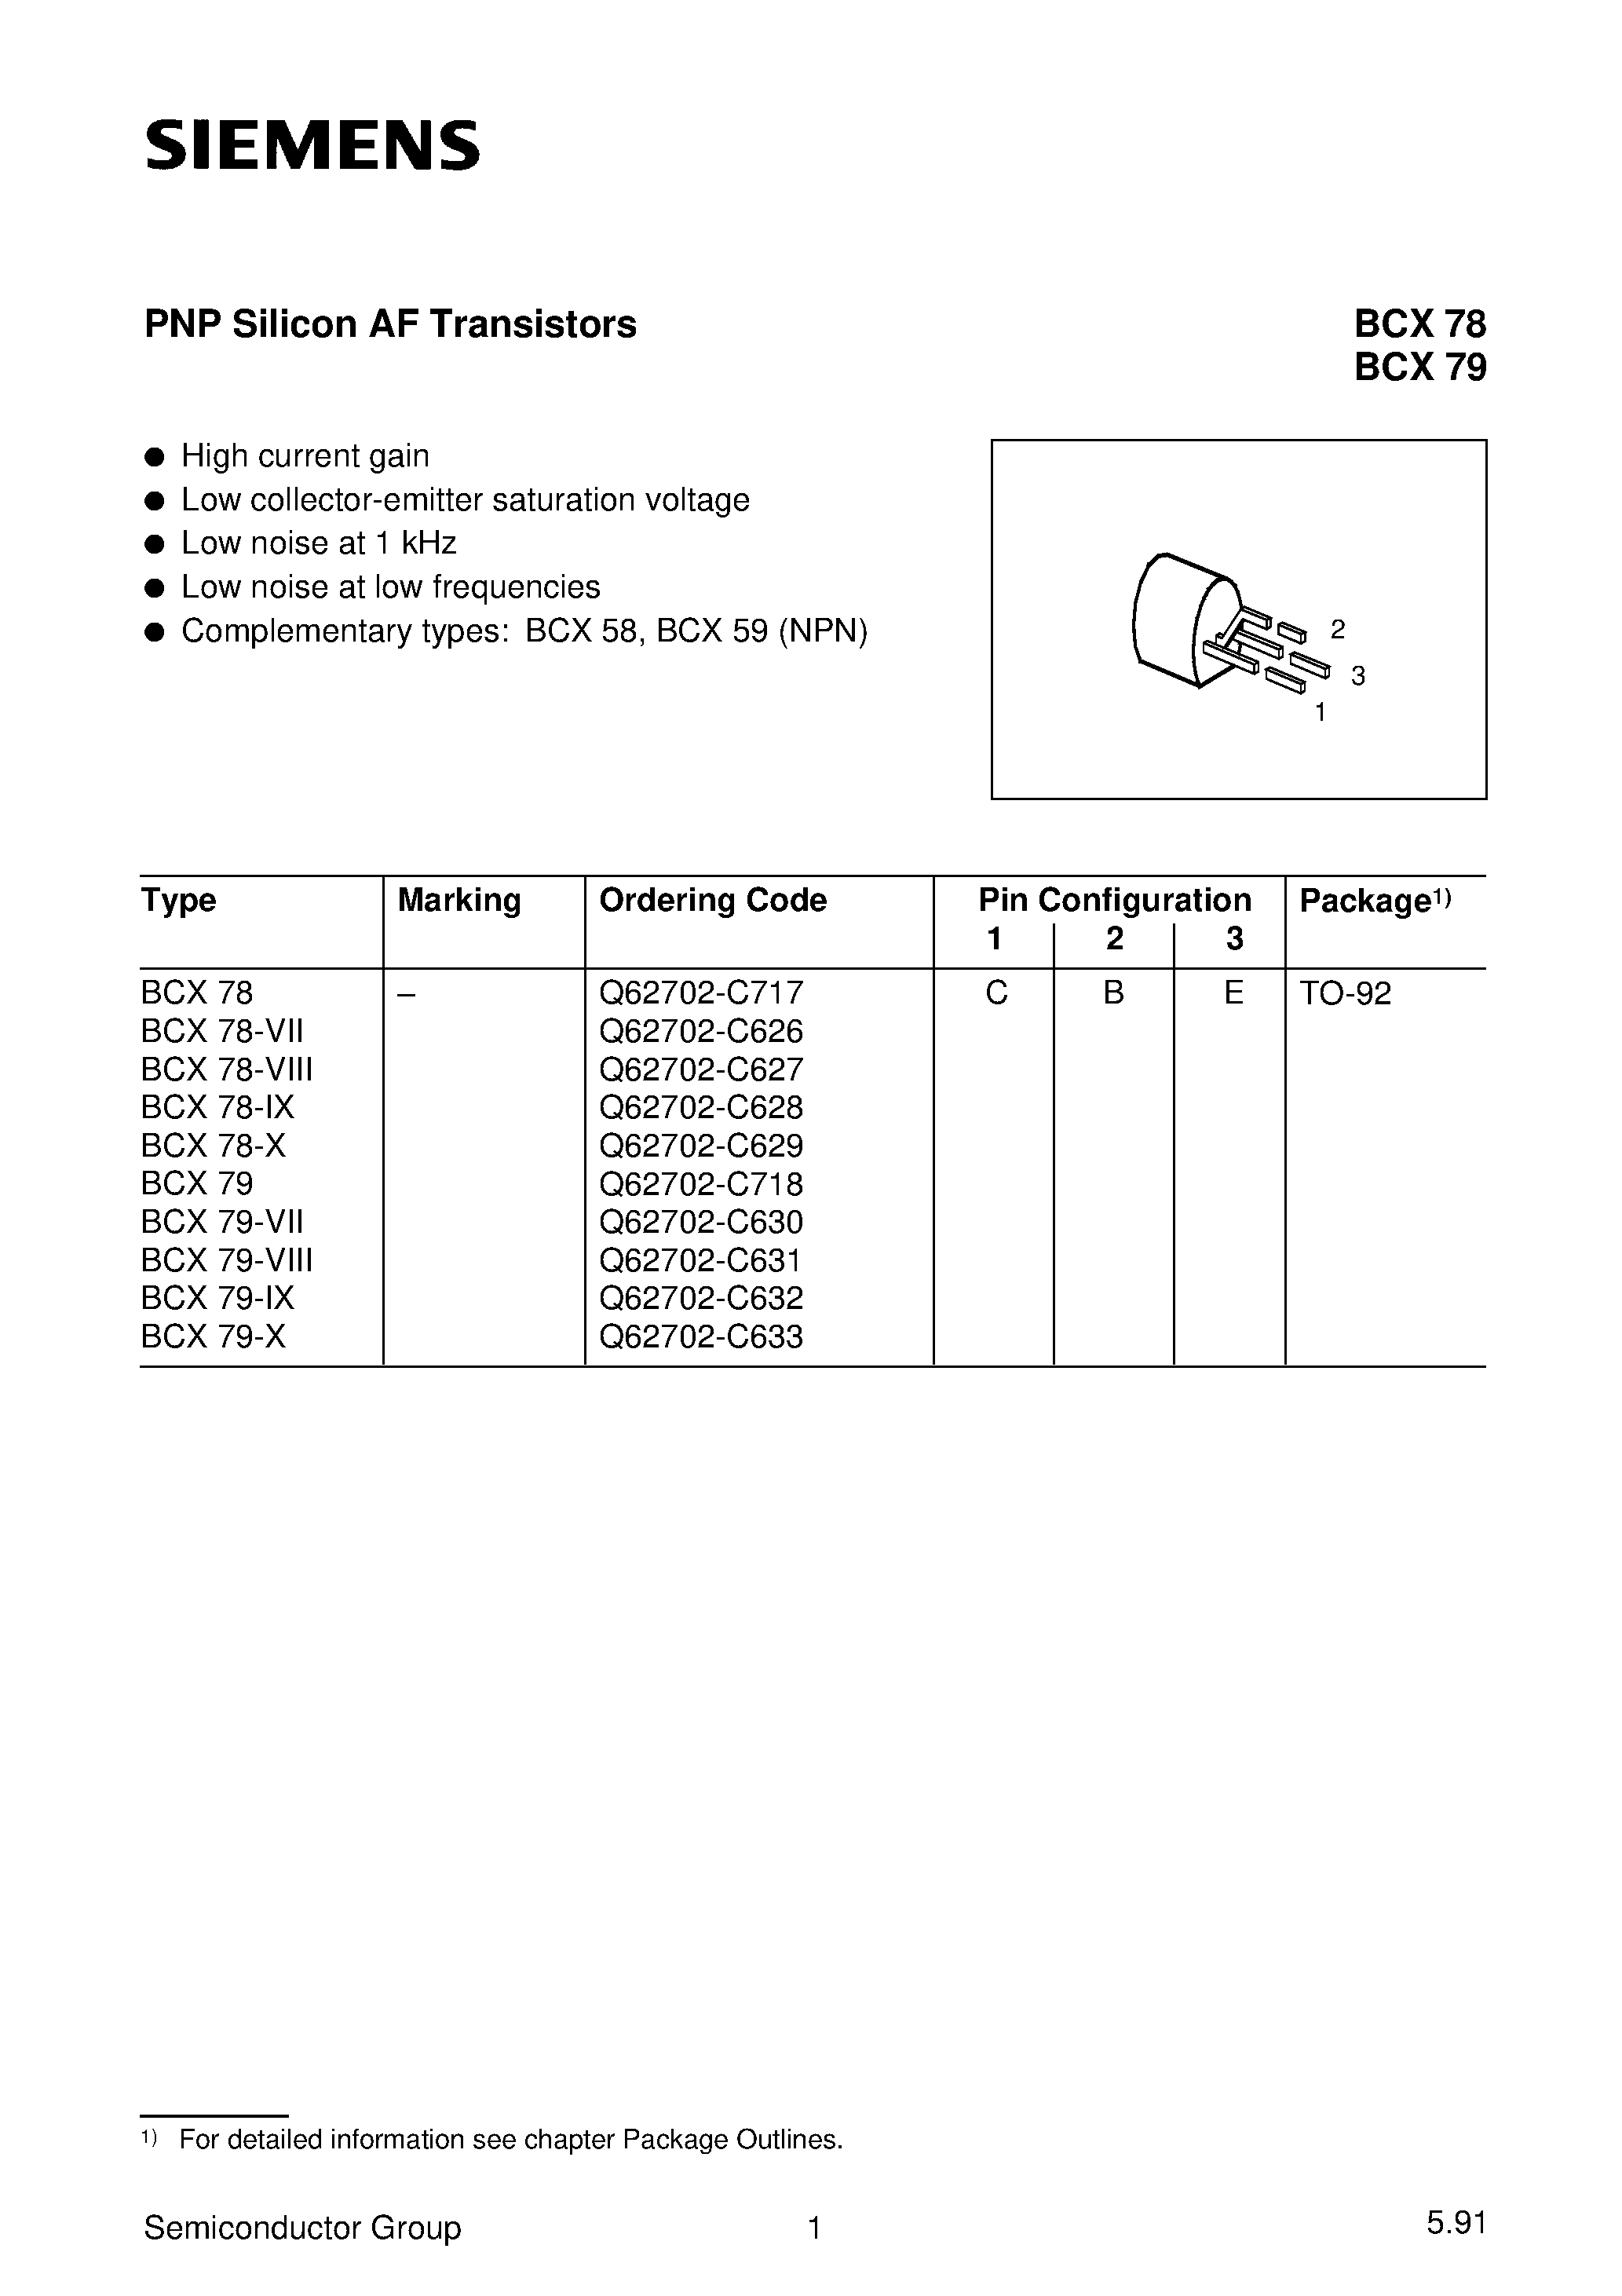 Datasheet BCX79-VIII - PNP Silicon AF Transistors (High current gain Low collector-emitter saturation voltage) page 1